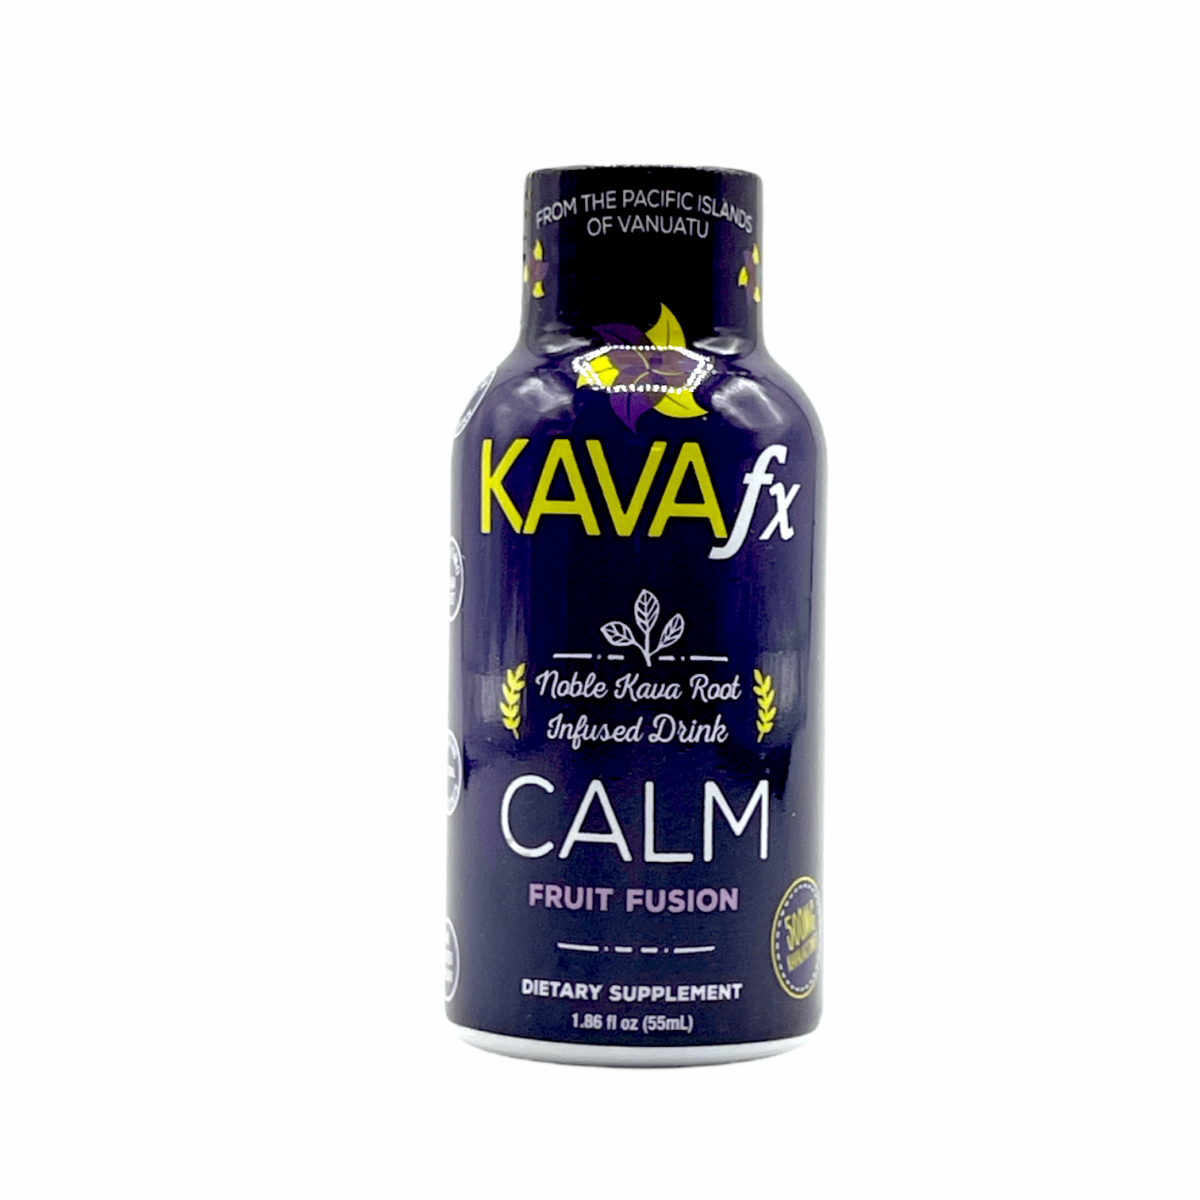 KAVA fx Liquid Shot, CALM Fruit Fusion, 55ml